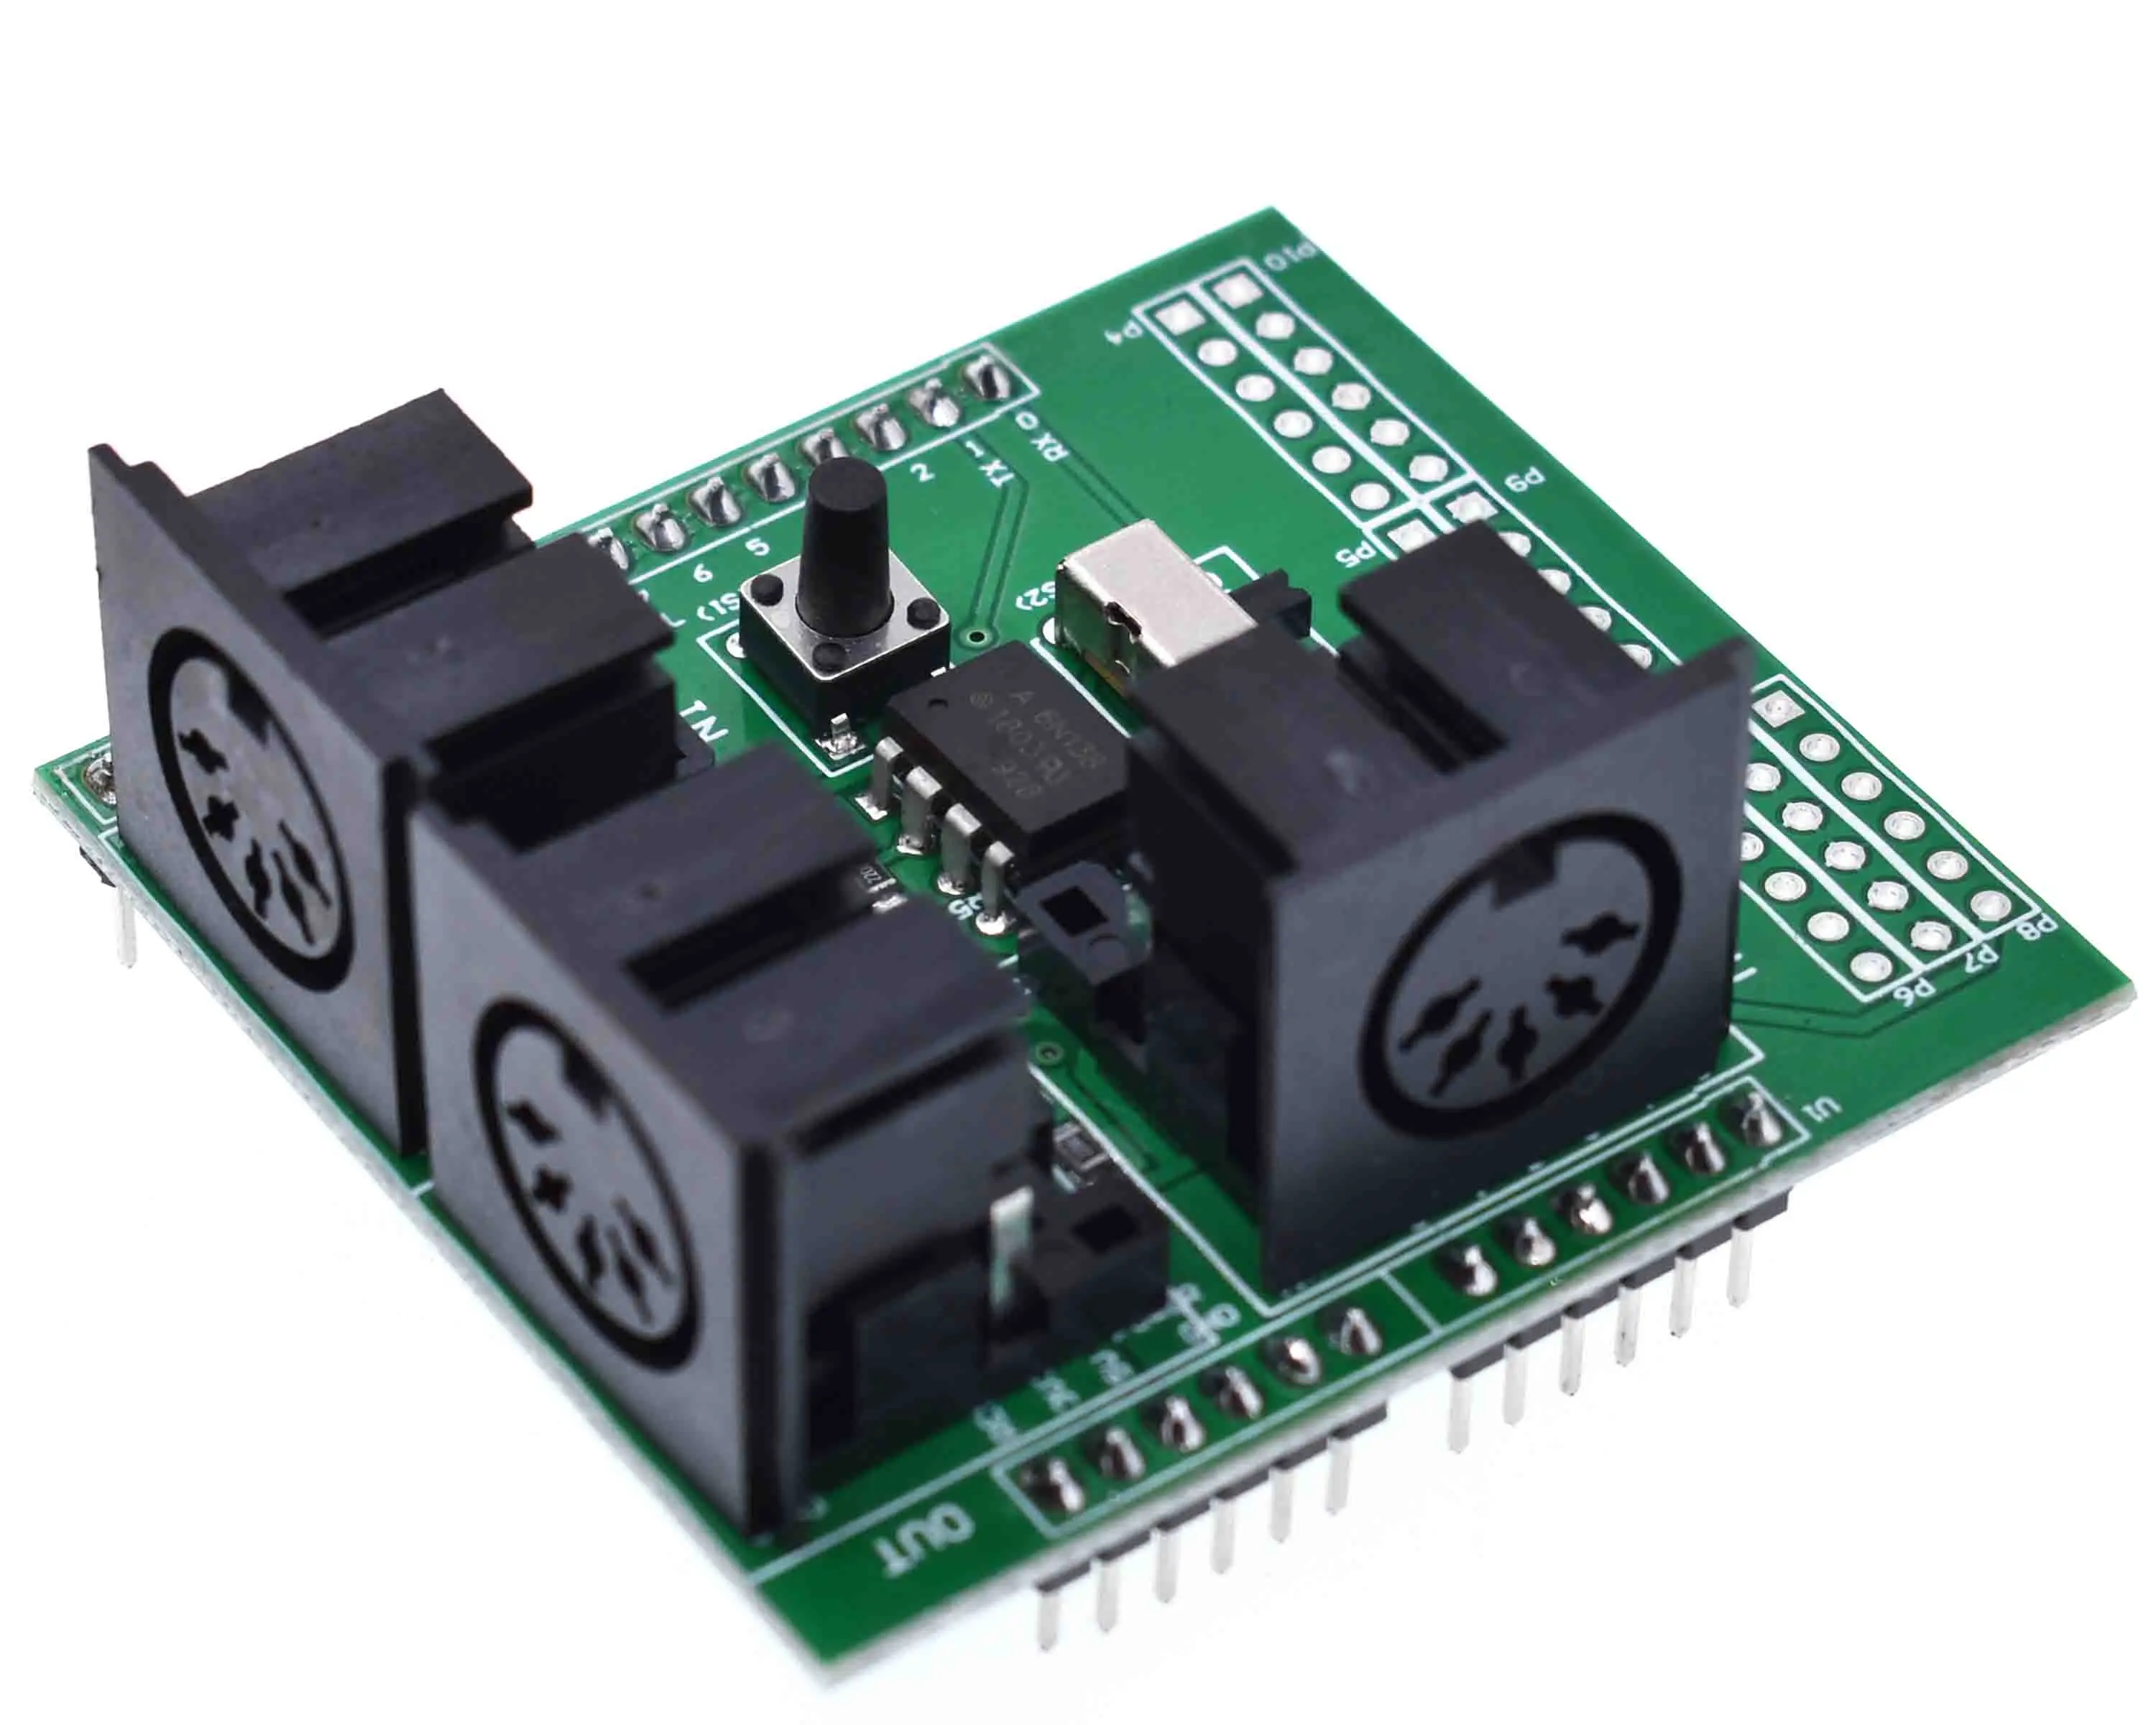 midi-shield-musical-breakout-board-instrument-digital-interface-adapter-plate-for-compatible-arduino-adapter-board-module